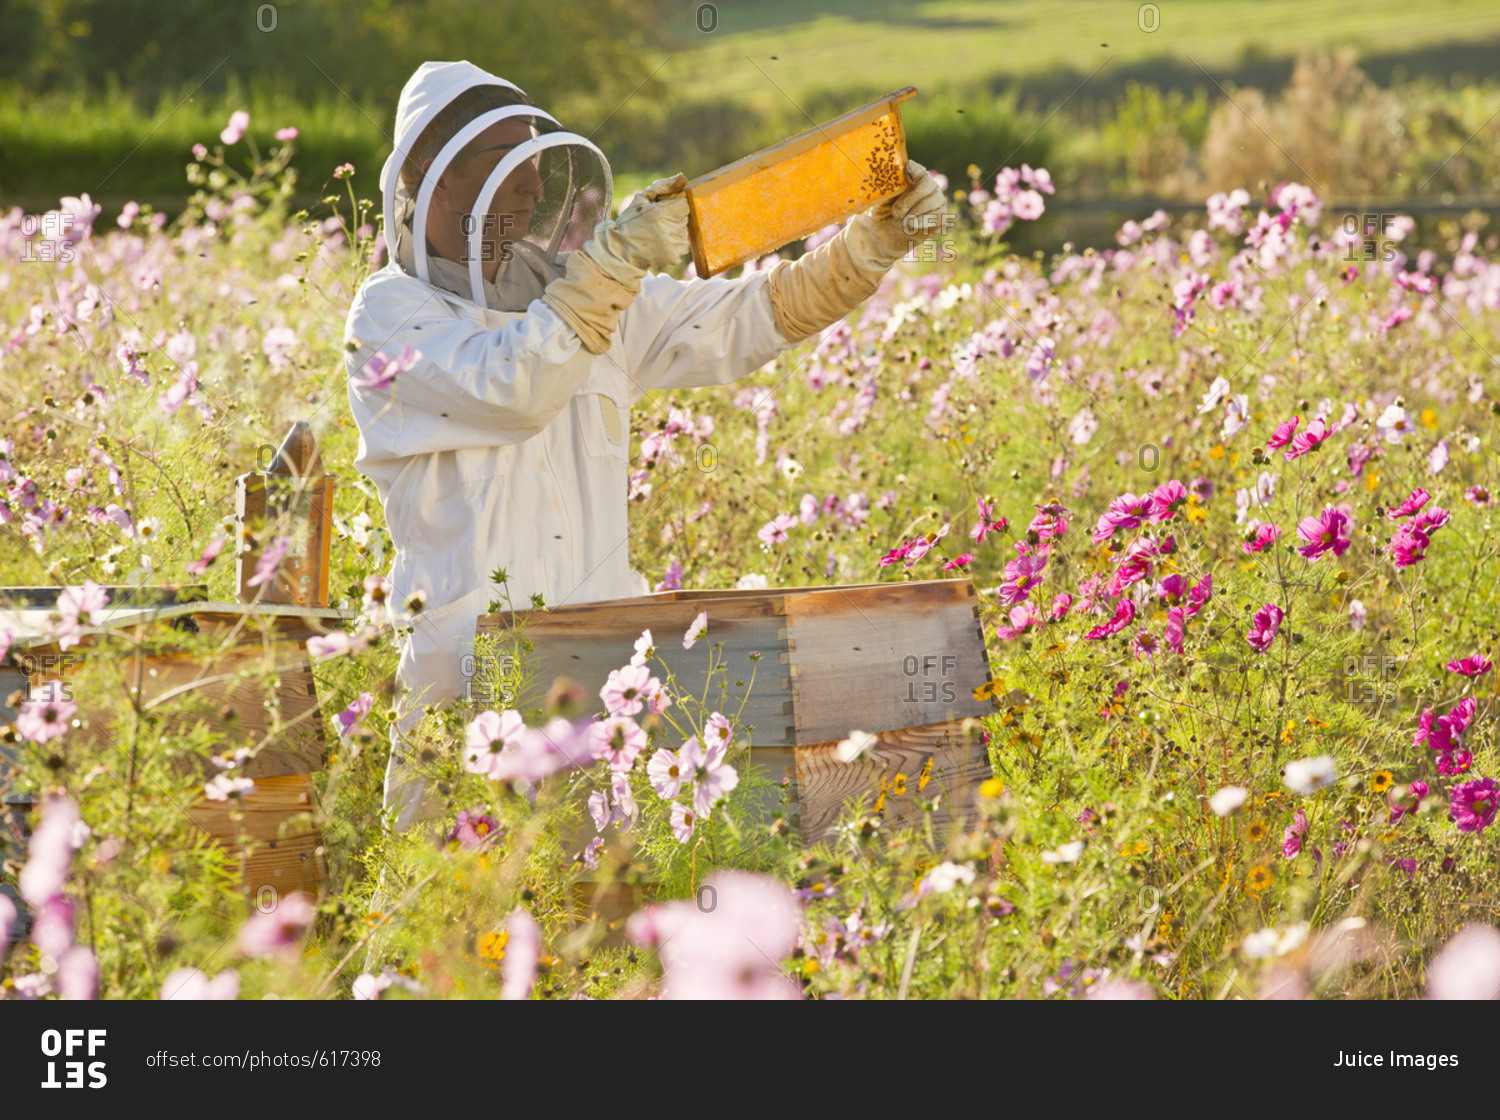 Beekeeper checking honey on beehive frame in field full of flowers